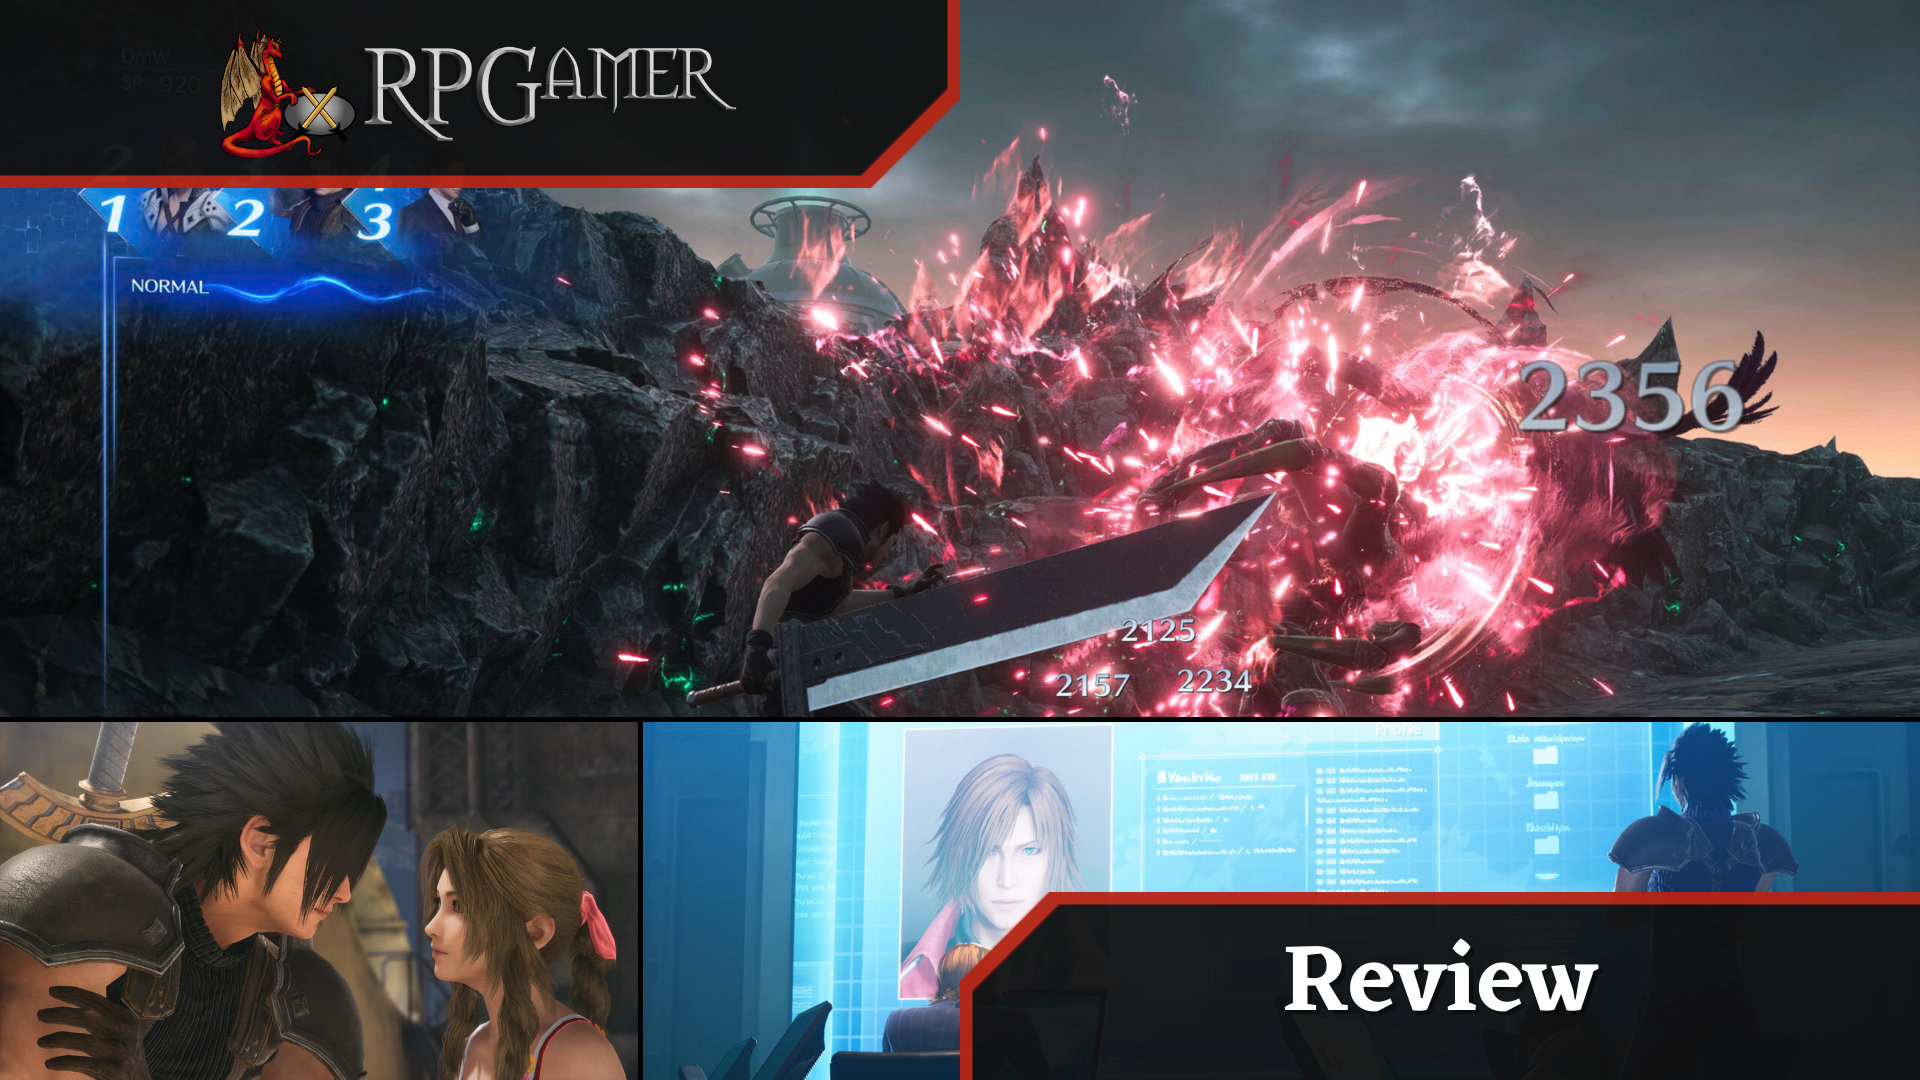 Crisis Core: Final Fantasy VII Reunion review scores around the